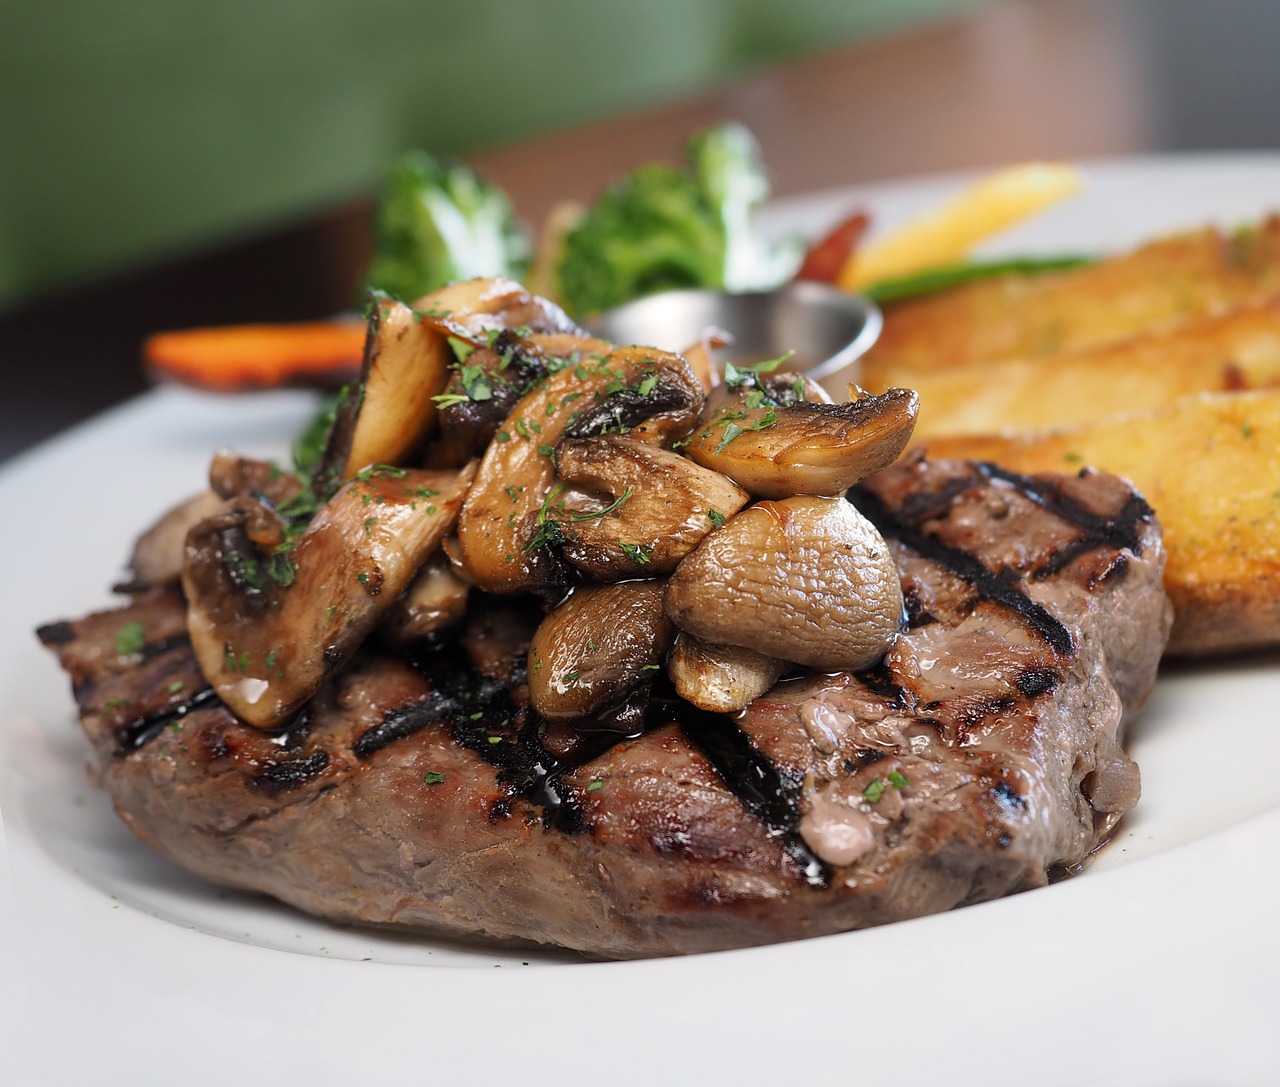 Beef Tenderloin Steak With Mushrooms and Madeira